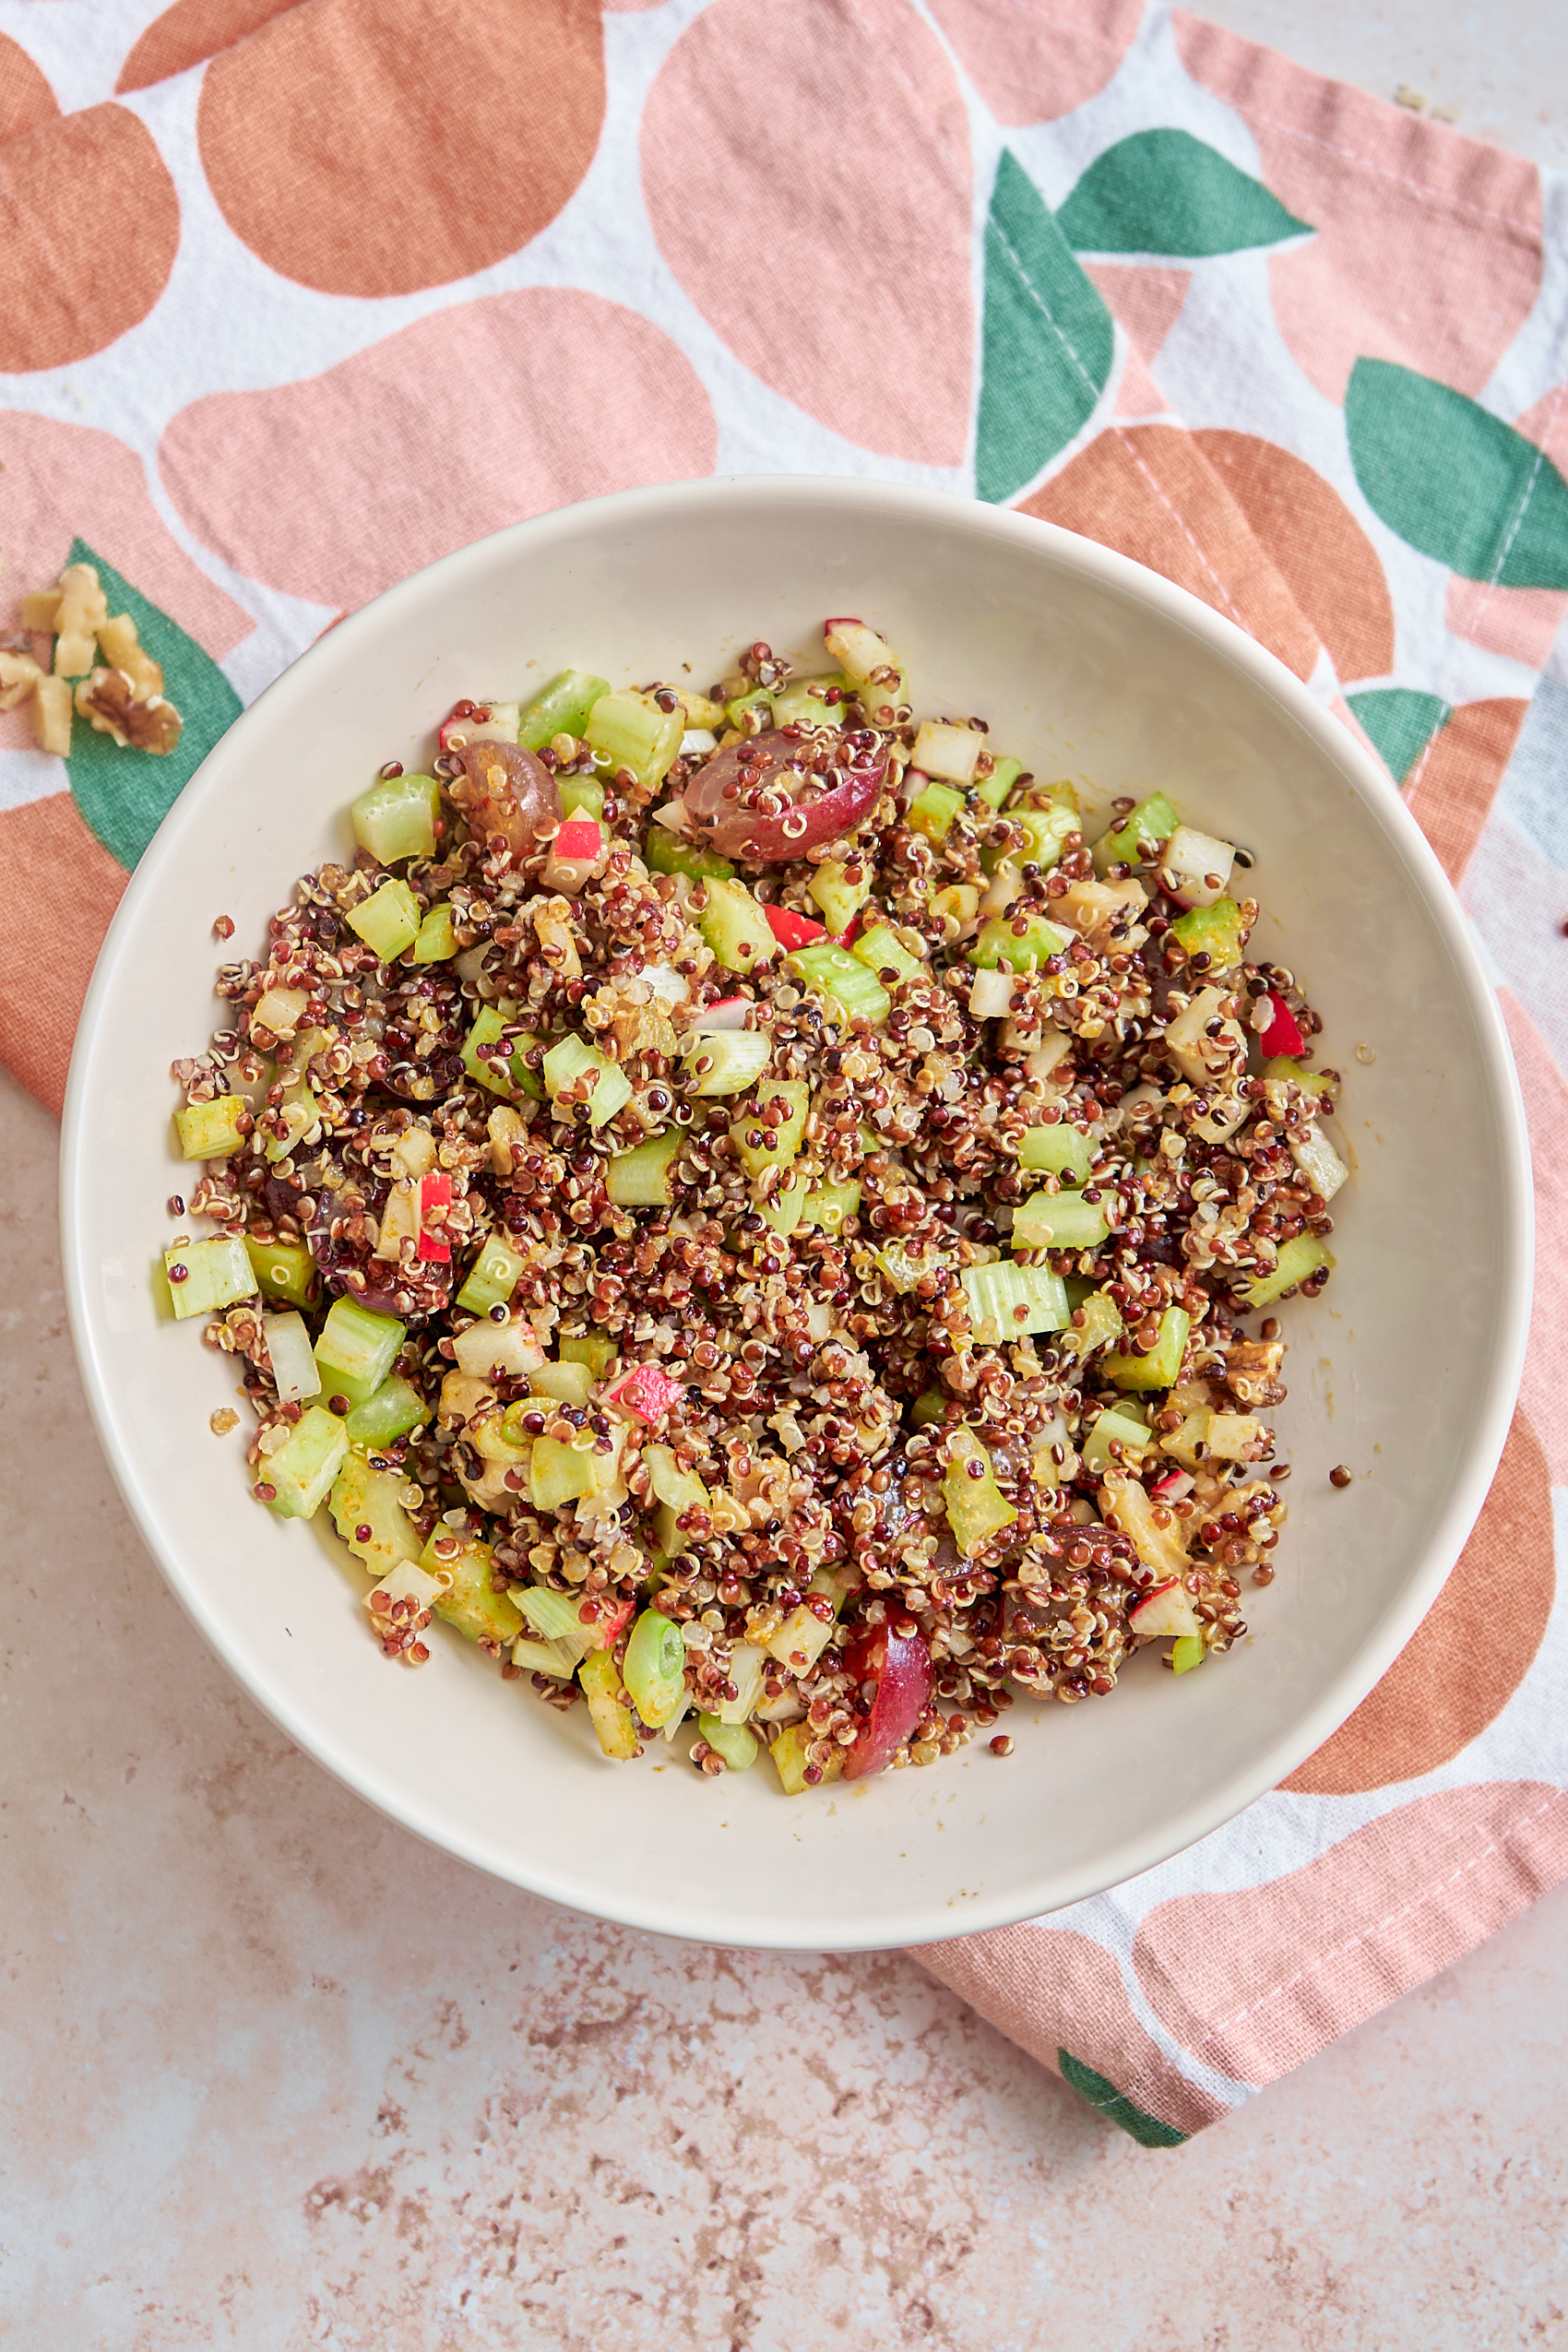 a bowl of quinoa salad containing celery, grapes, walnuts, red quinoa and a curry vinaigrette dressing